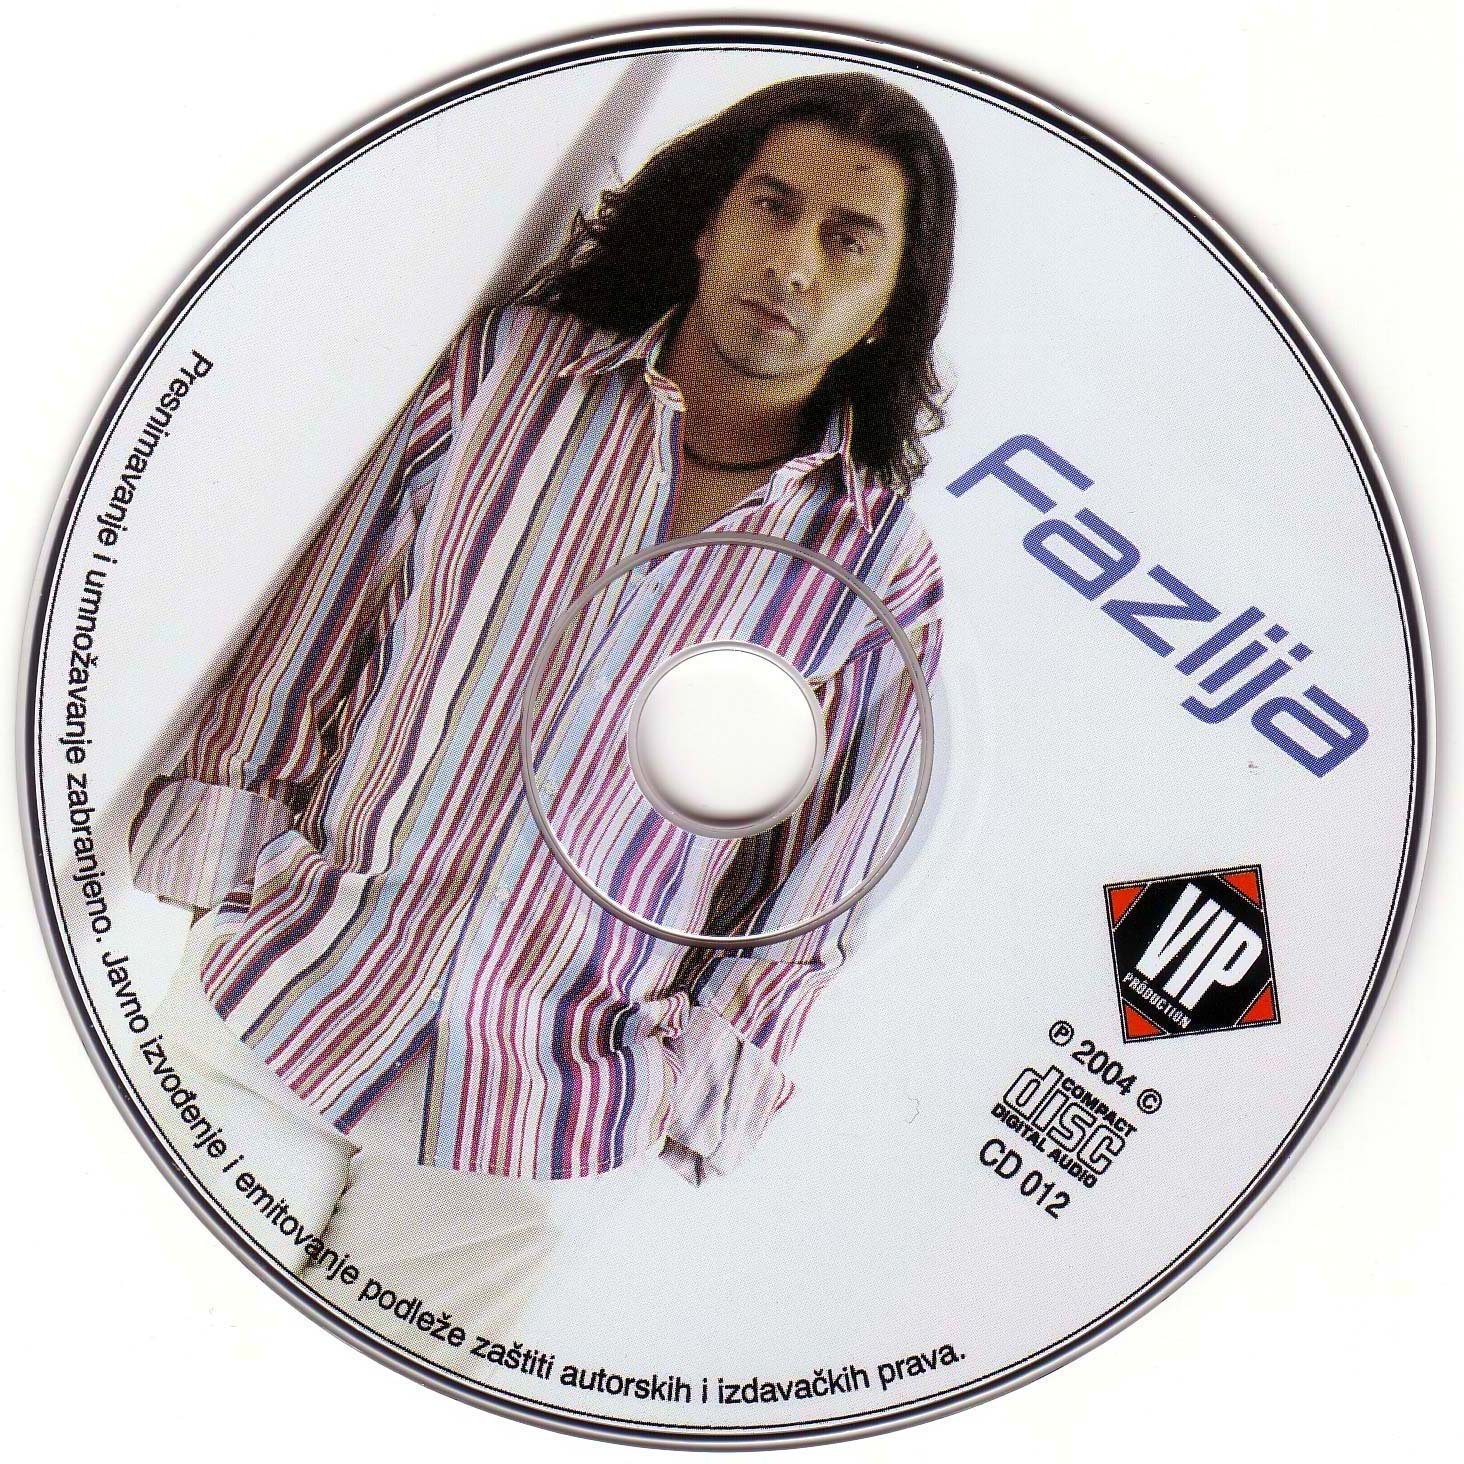 Fazlija 2004 2004 CD